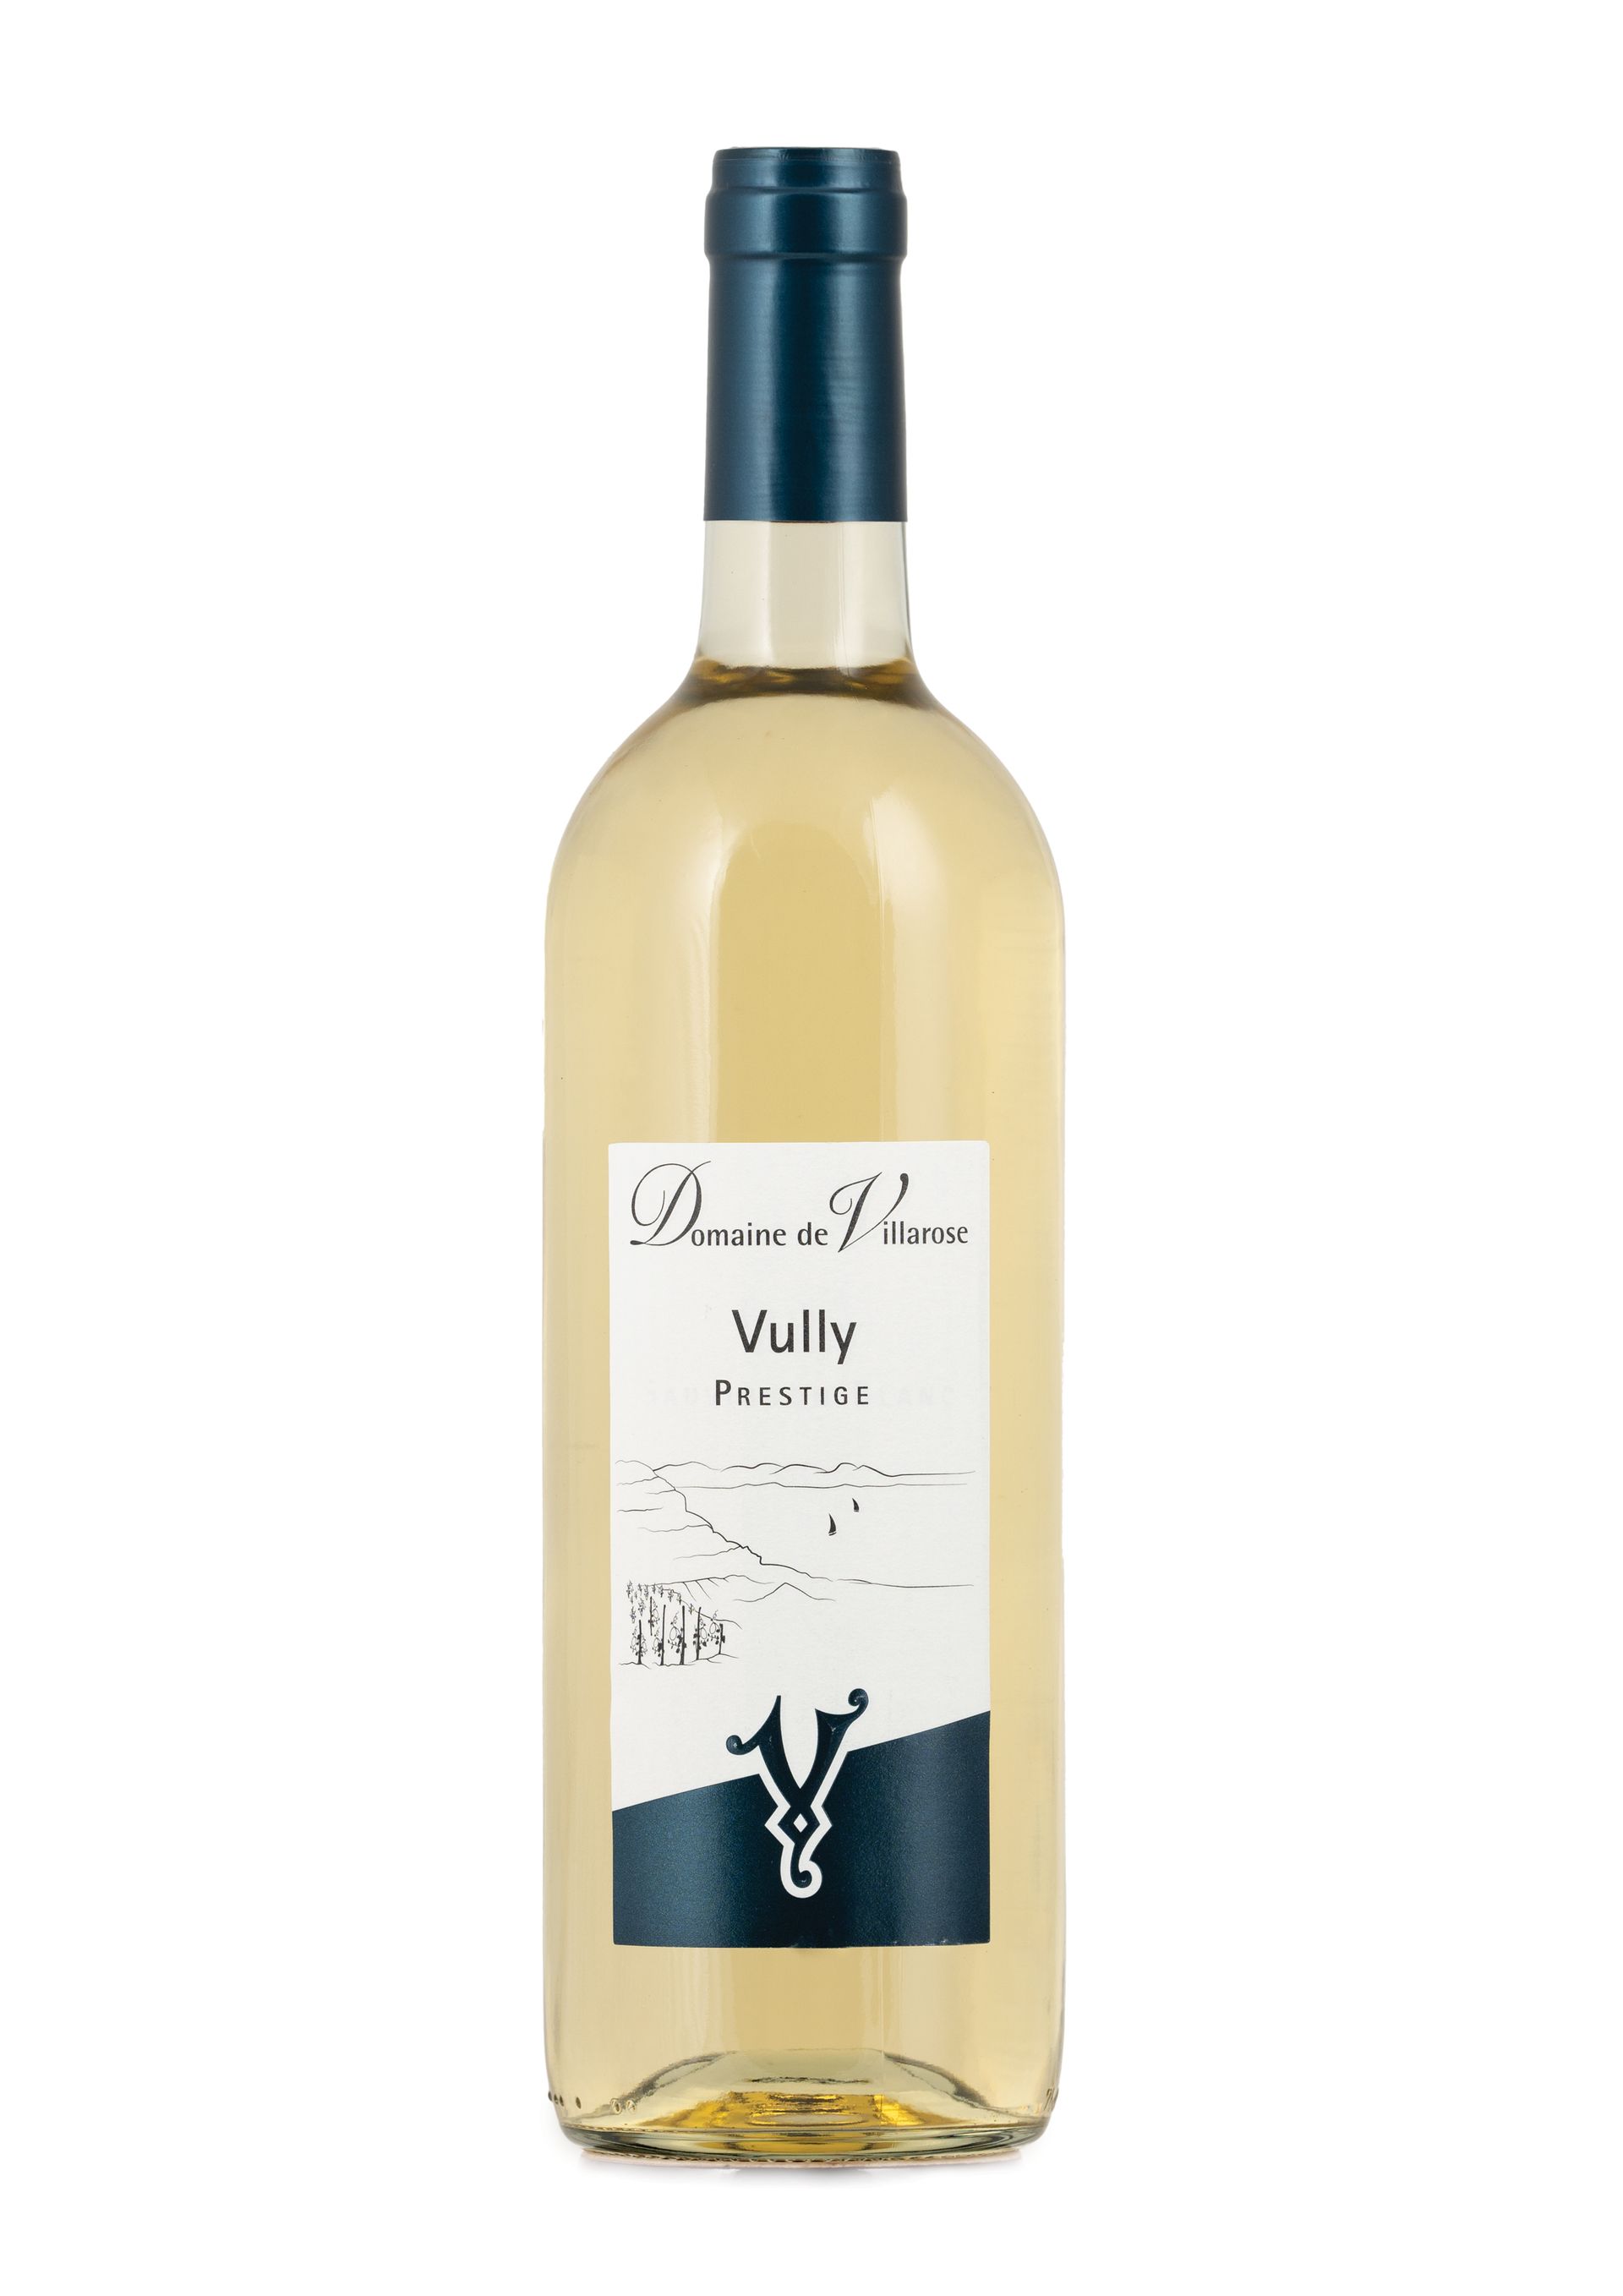 Vully blanc «Prestige» - Domaine de Villarose à Vully